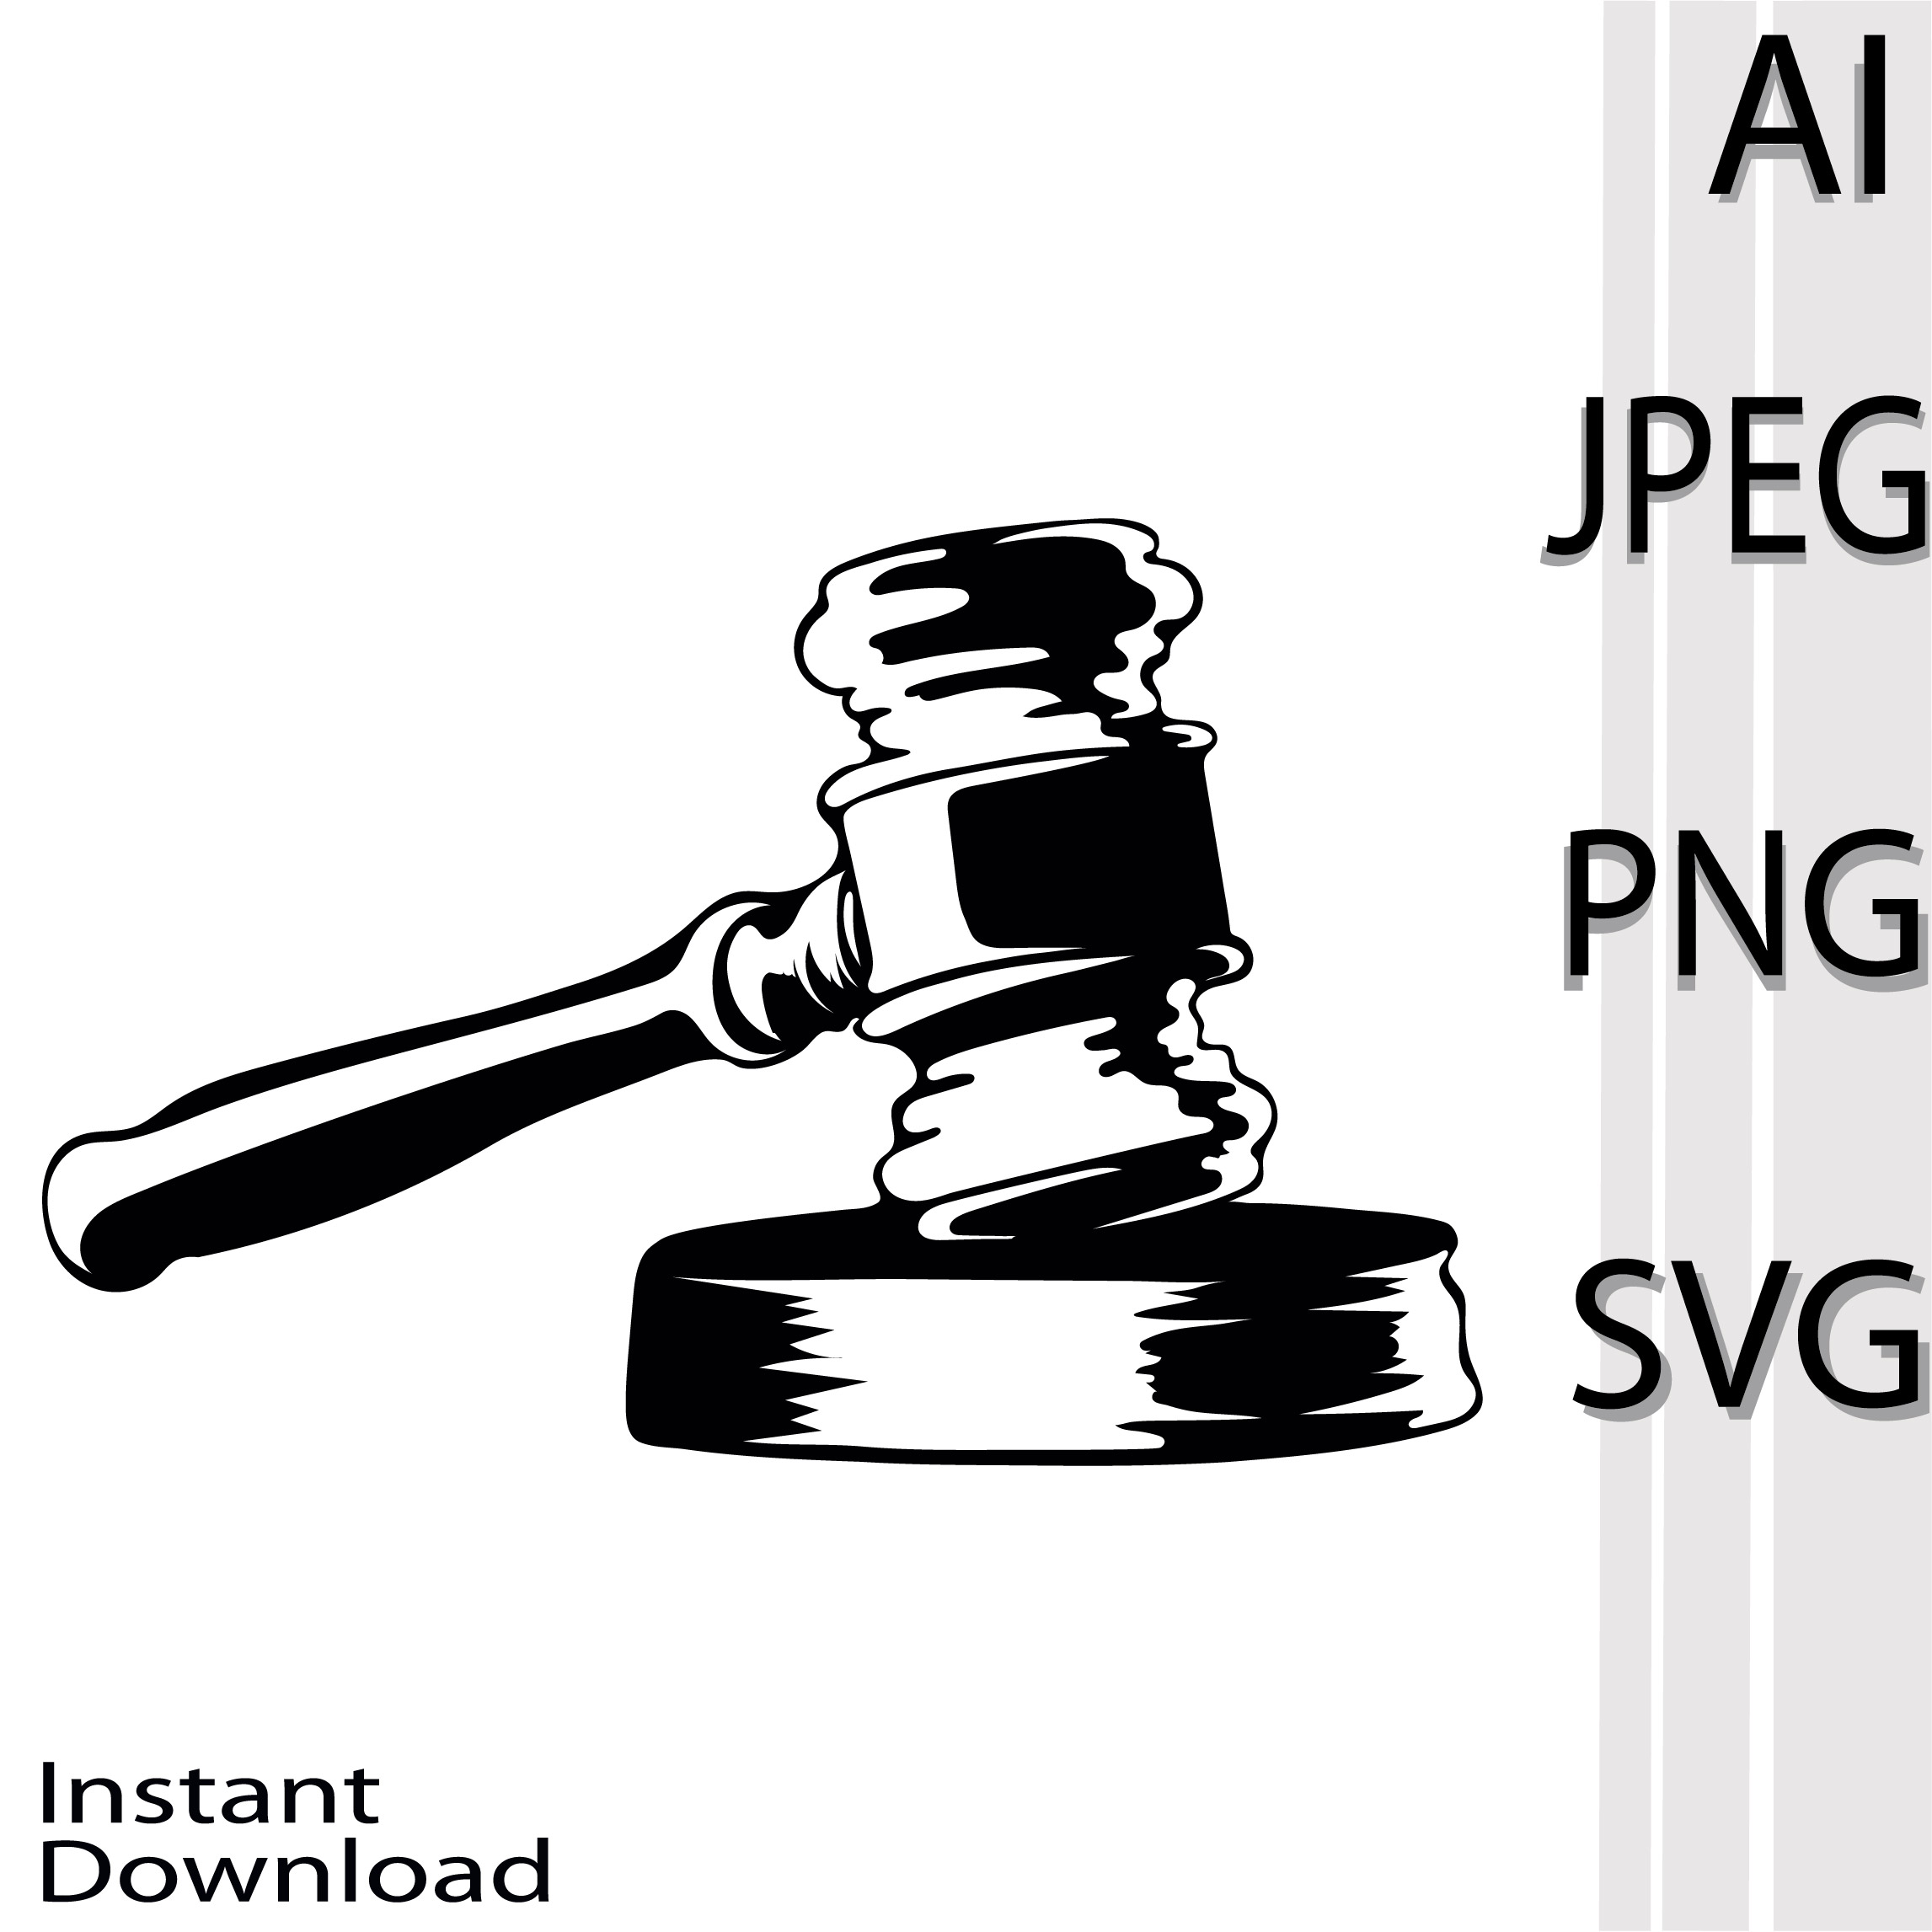 Judge's Gavel SVG pinterest image.